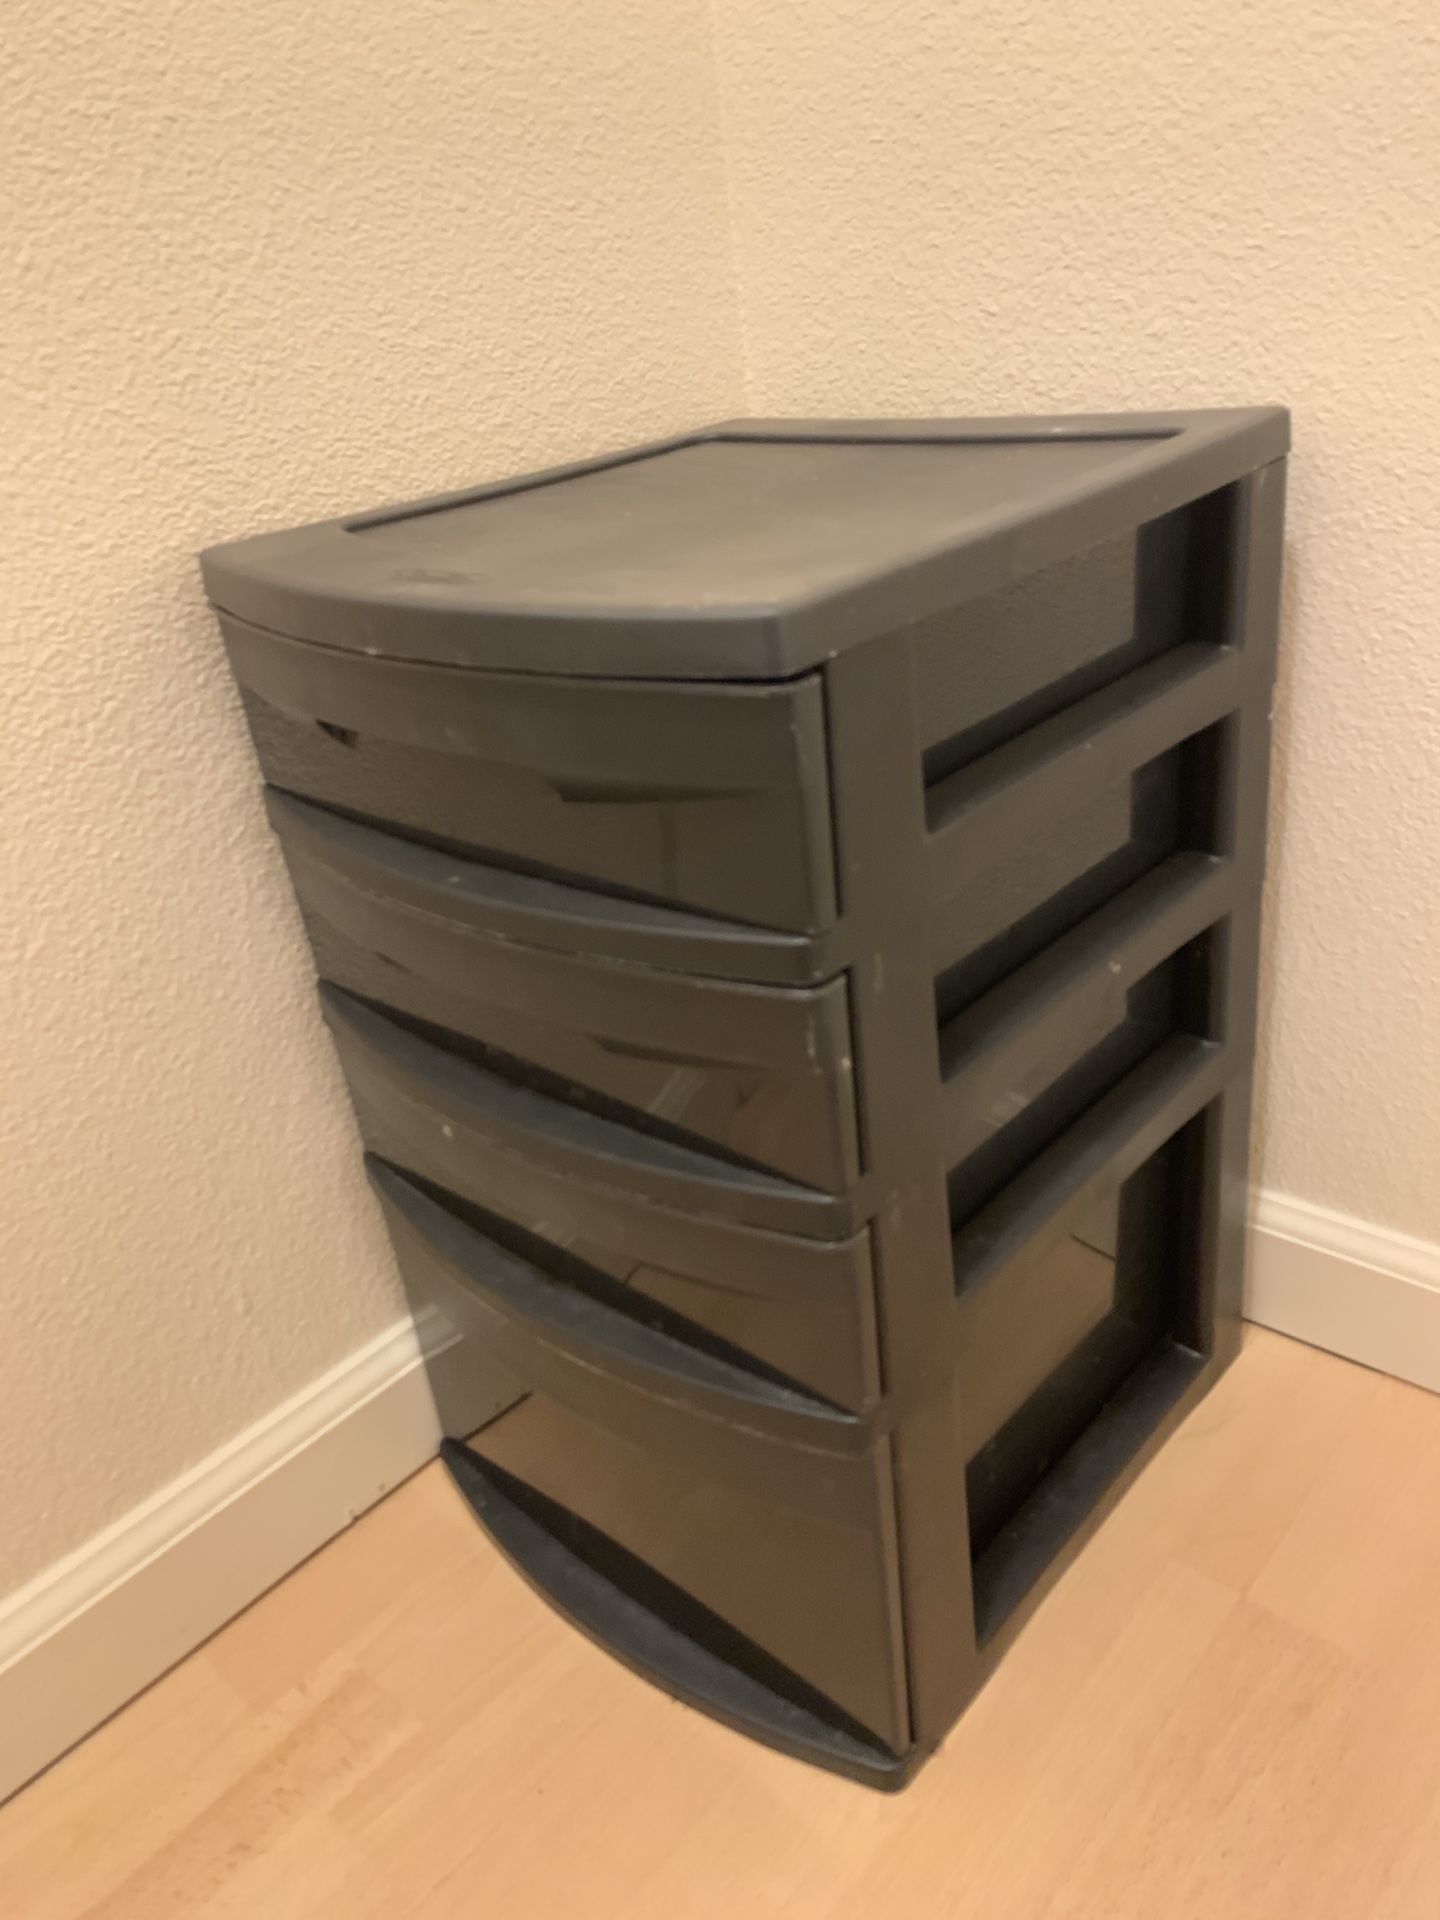 Nice dark plastic storage drawers